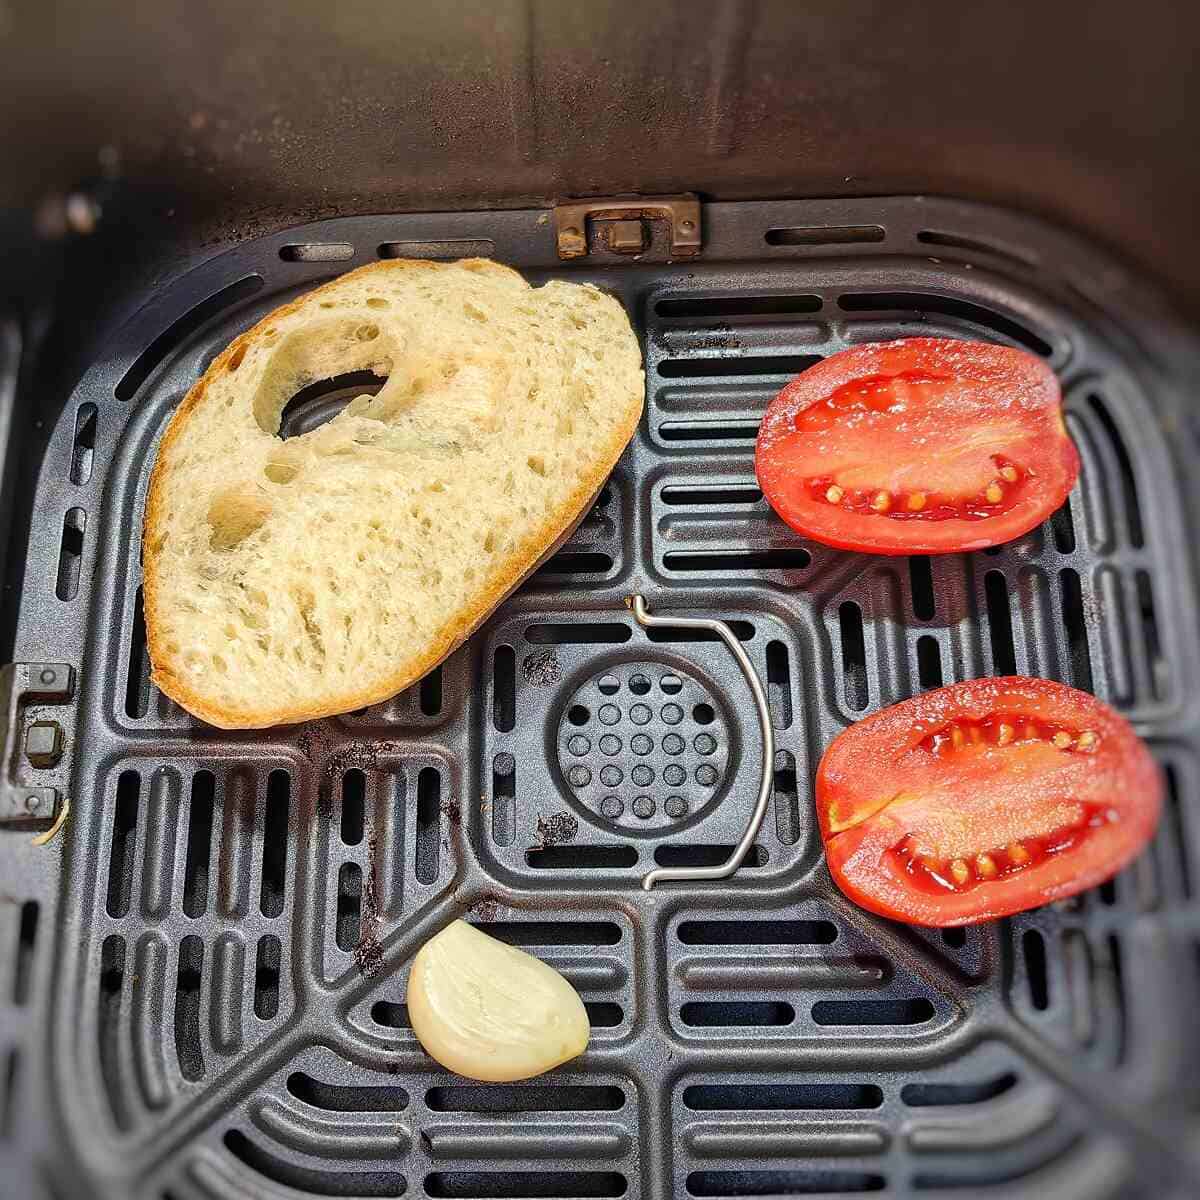 tomato halves, garlic clove and bread inside air fryer basket